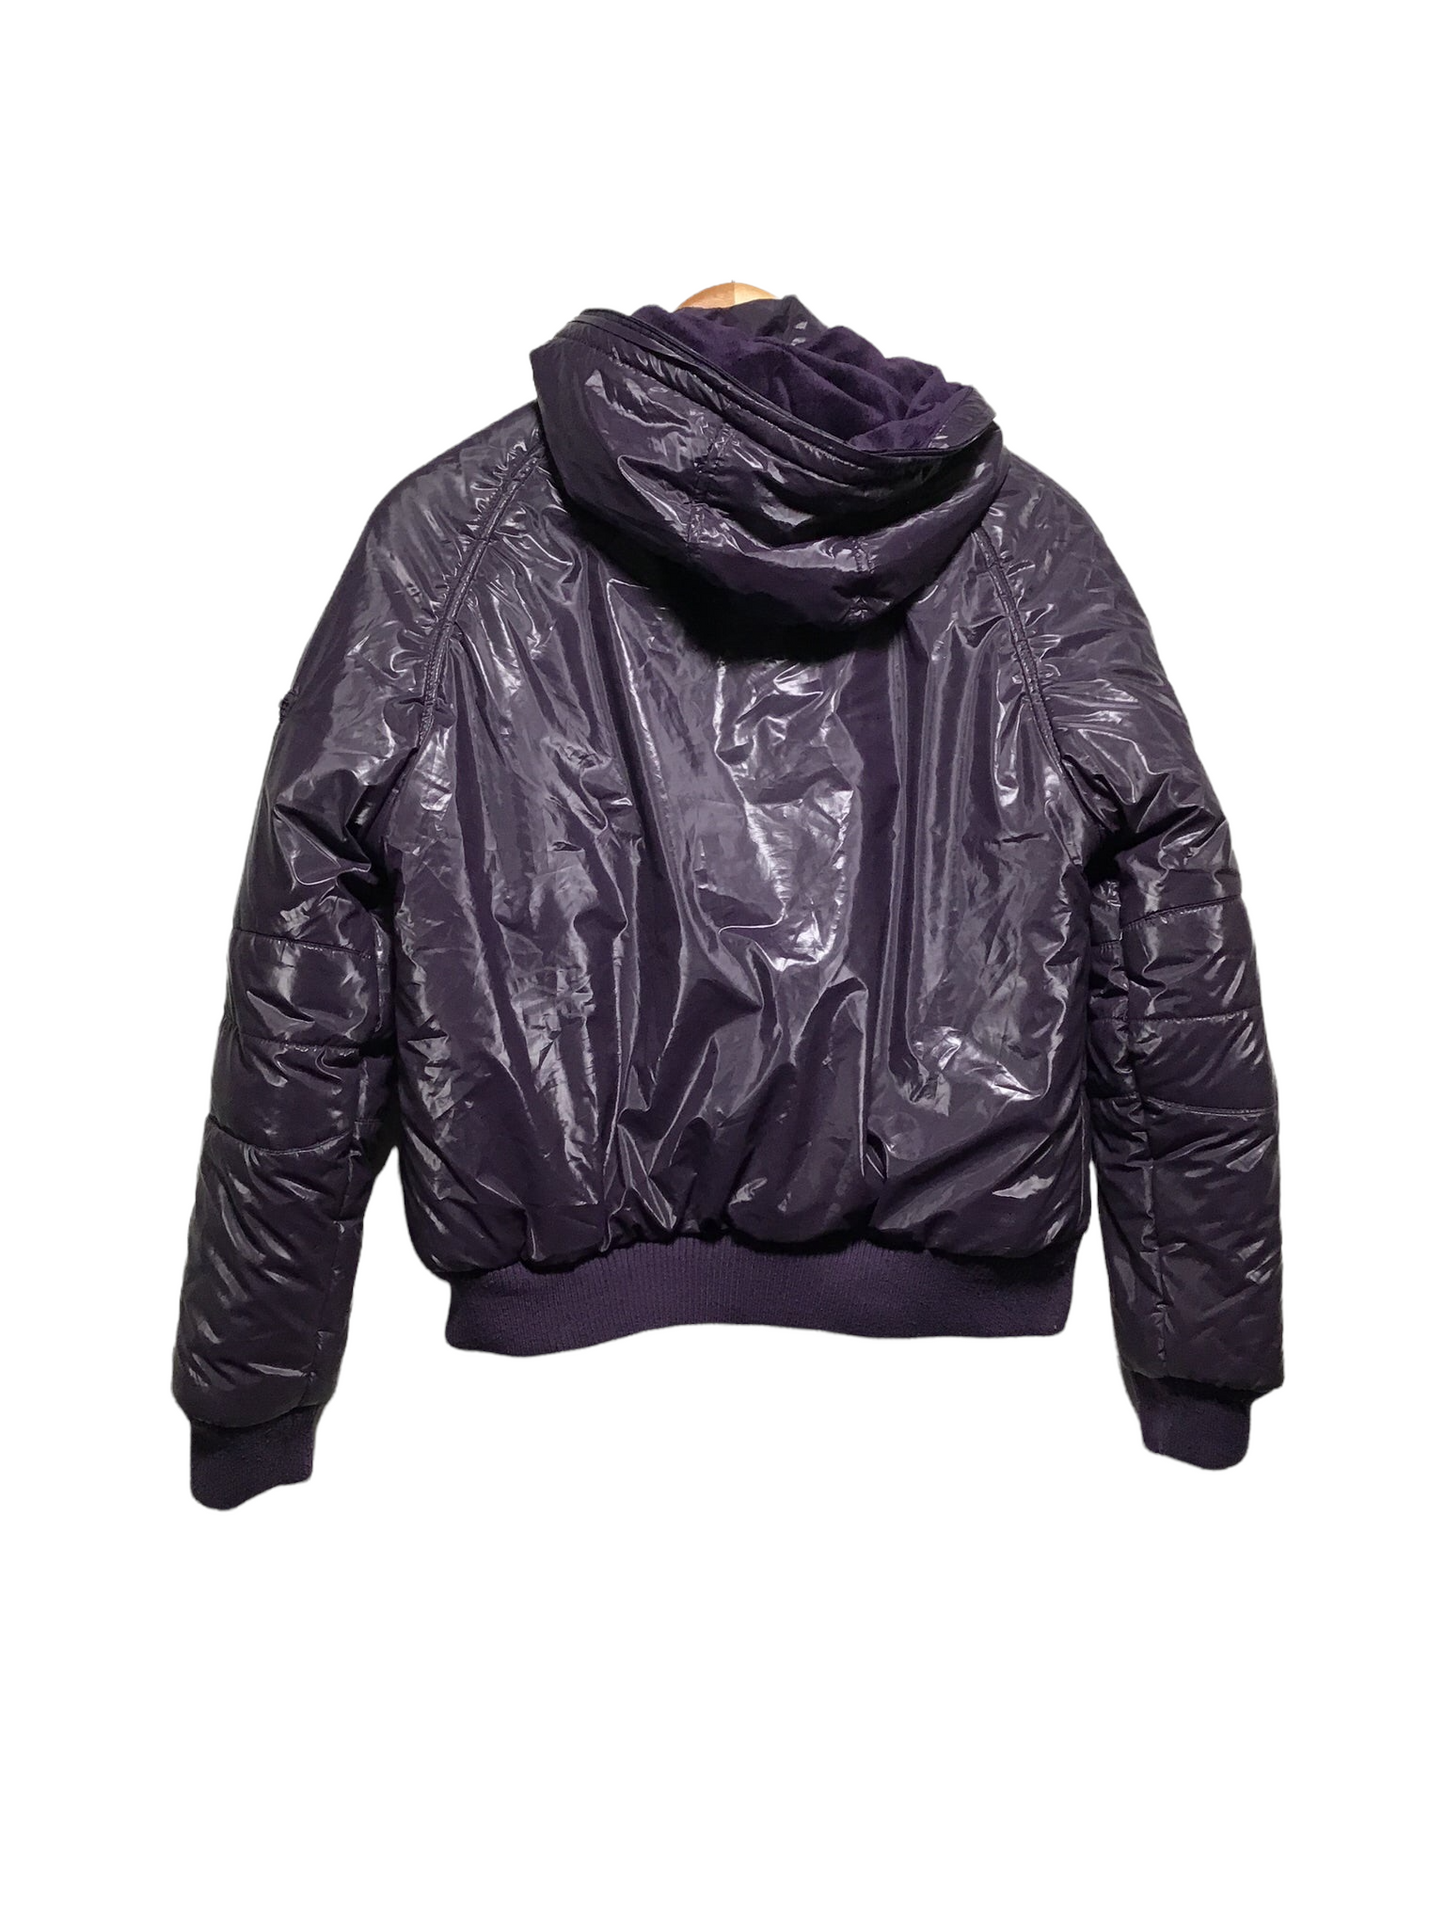 Moncler Shiny Puffer Jacket (Women’s Size S)